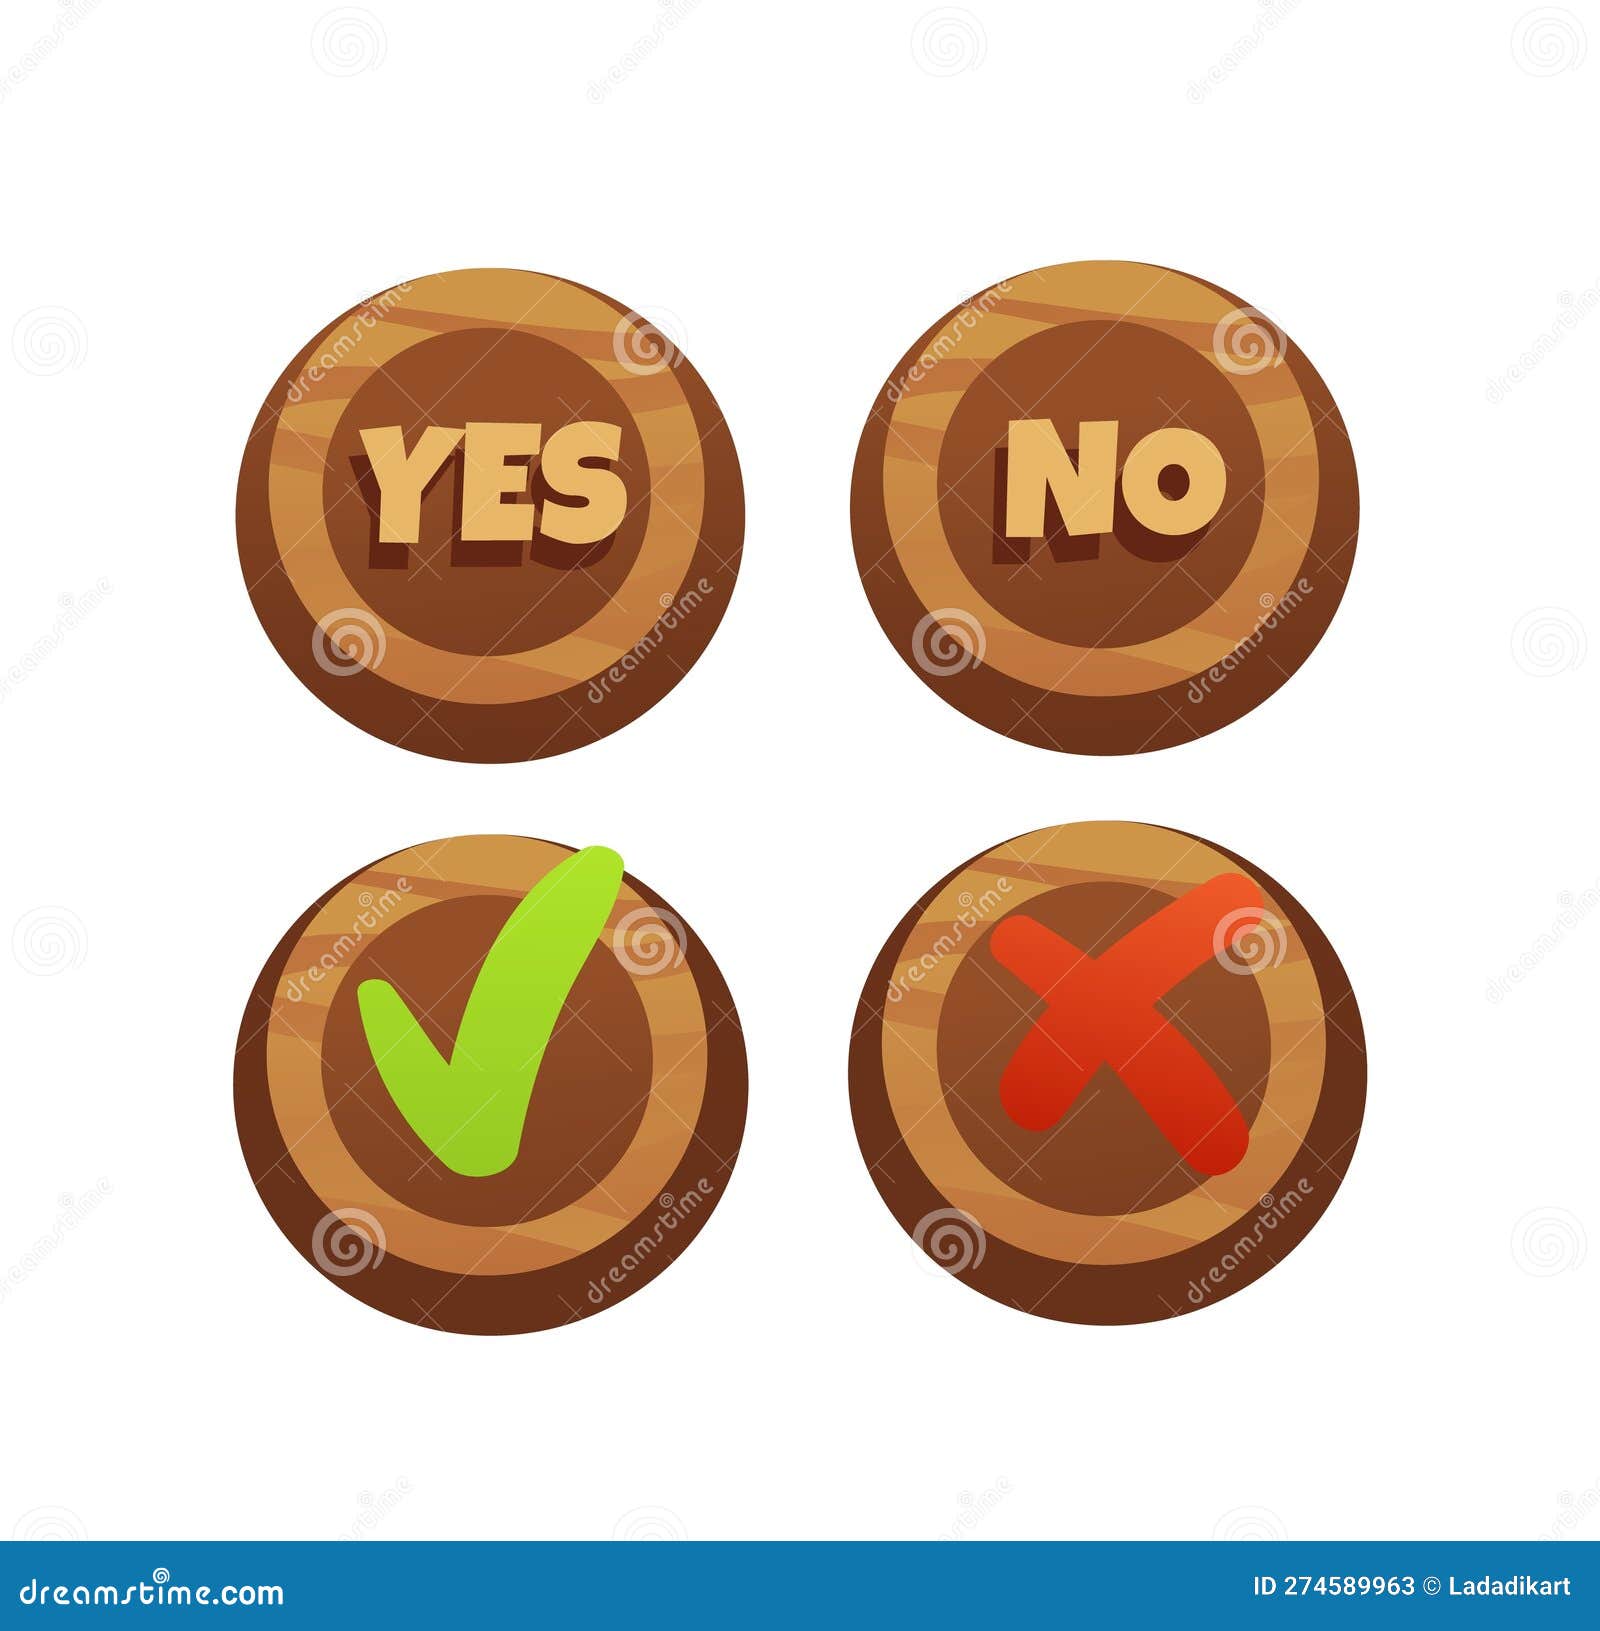 Wooden Button / No